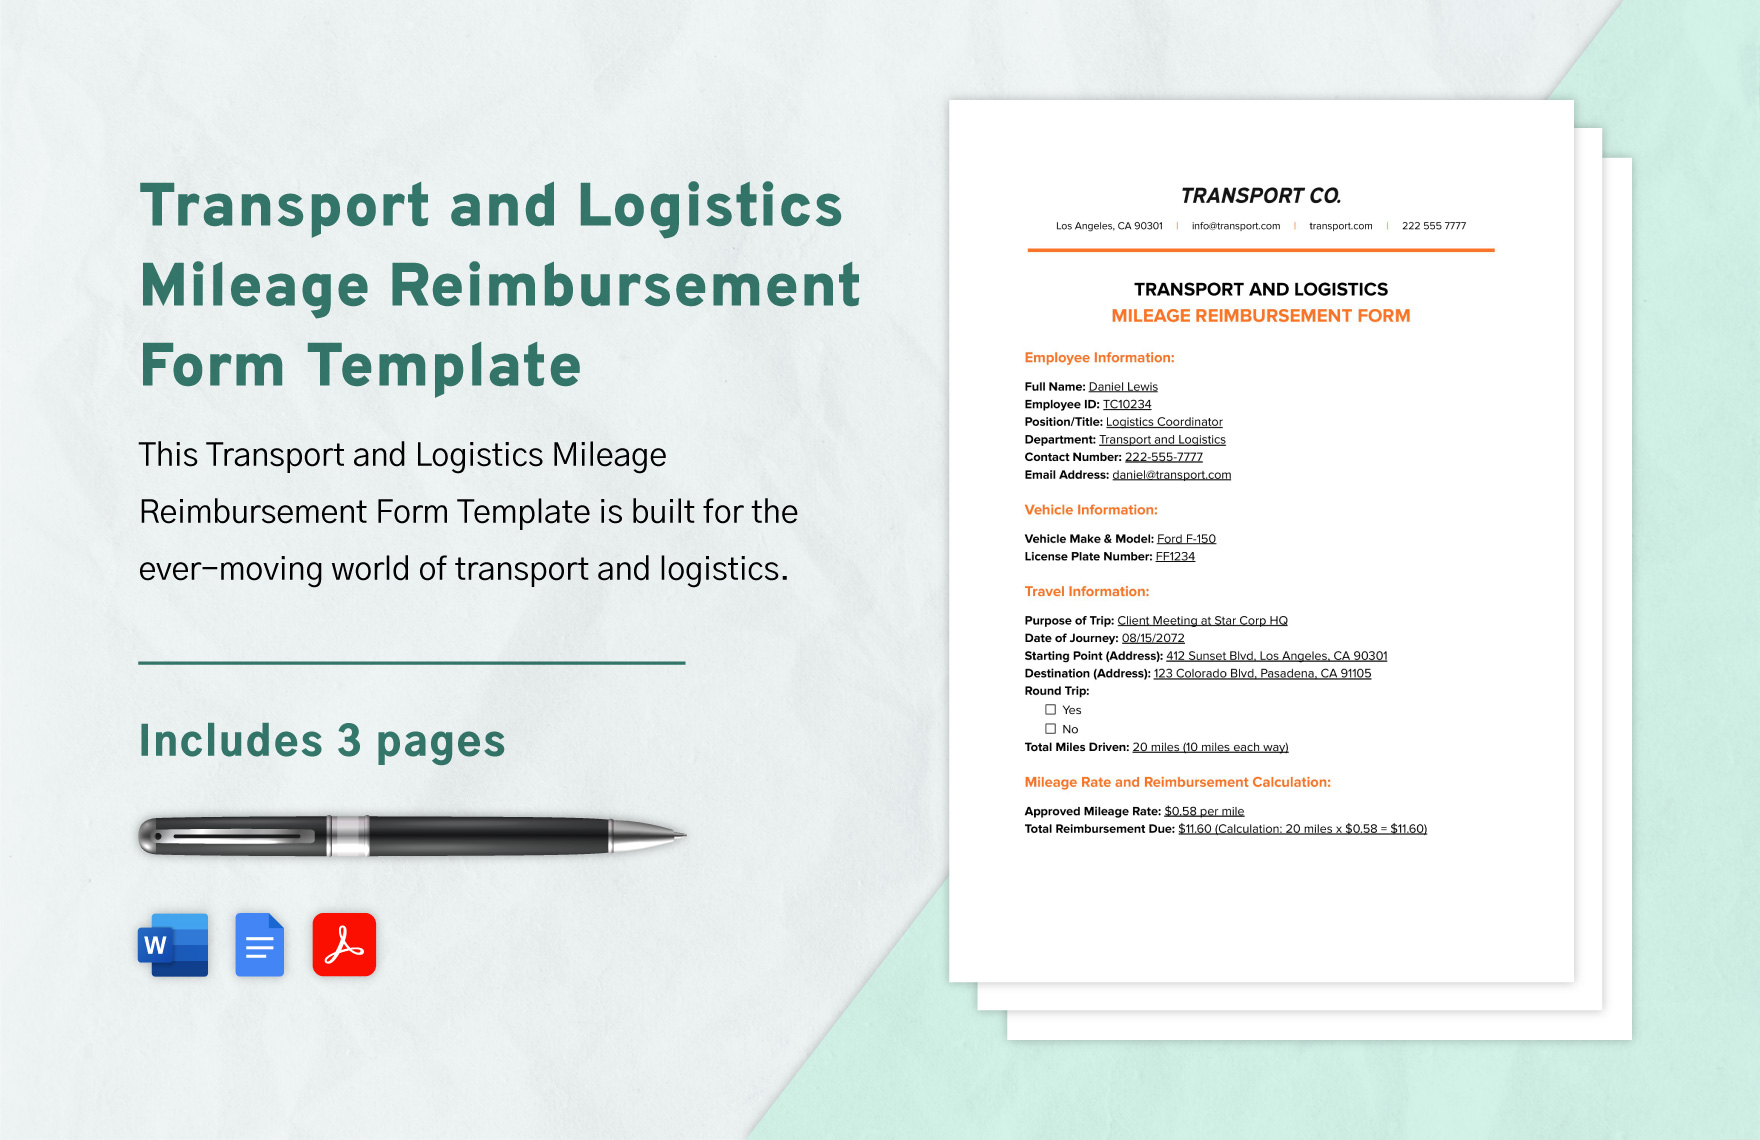 Transport and Logistics Mileage Reimbursement Form Template